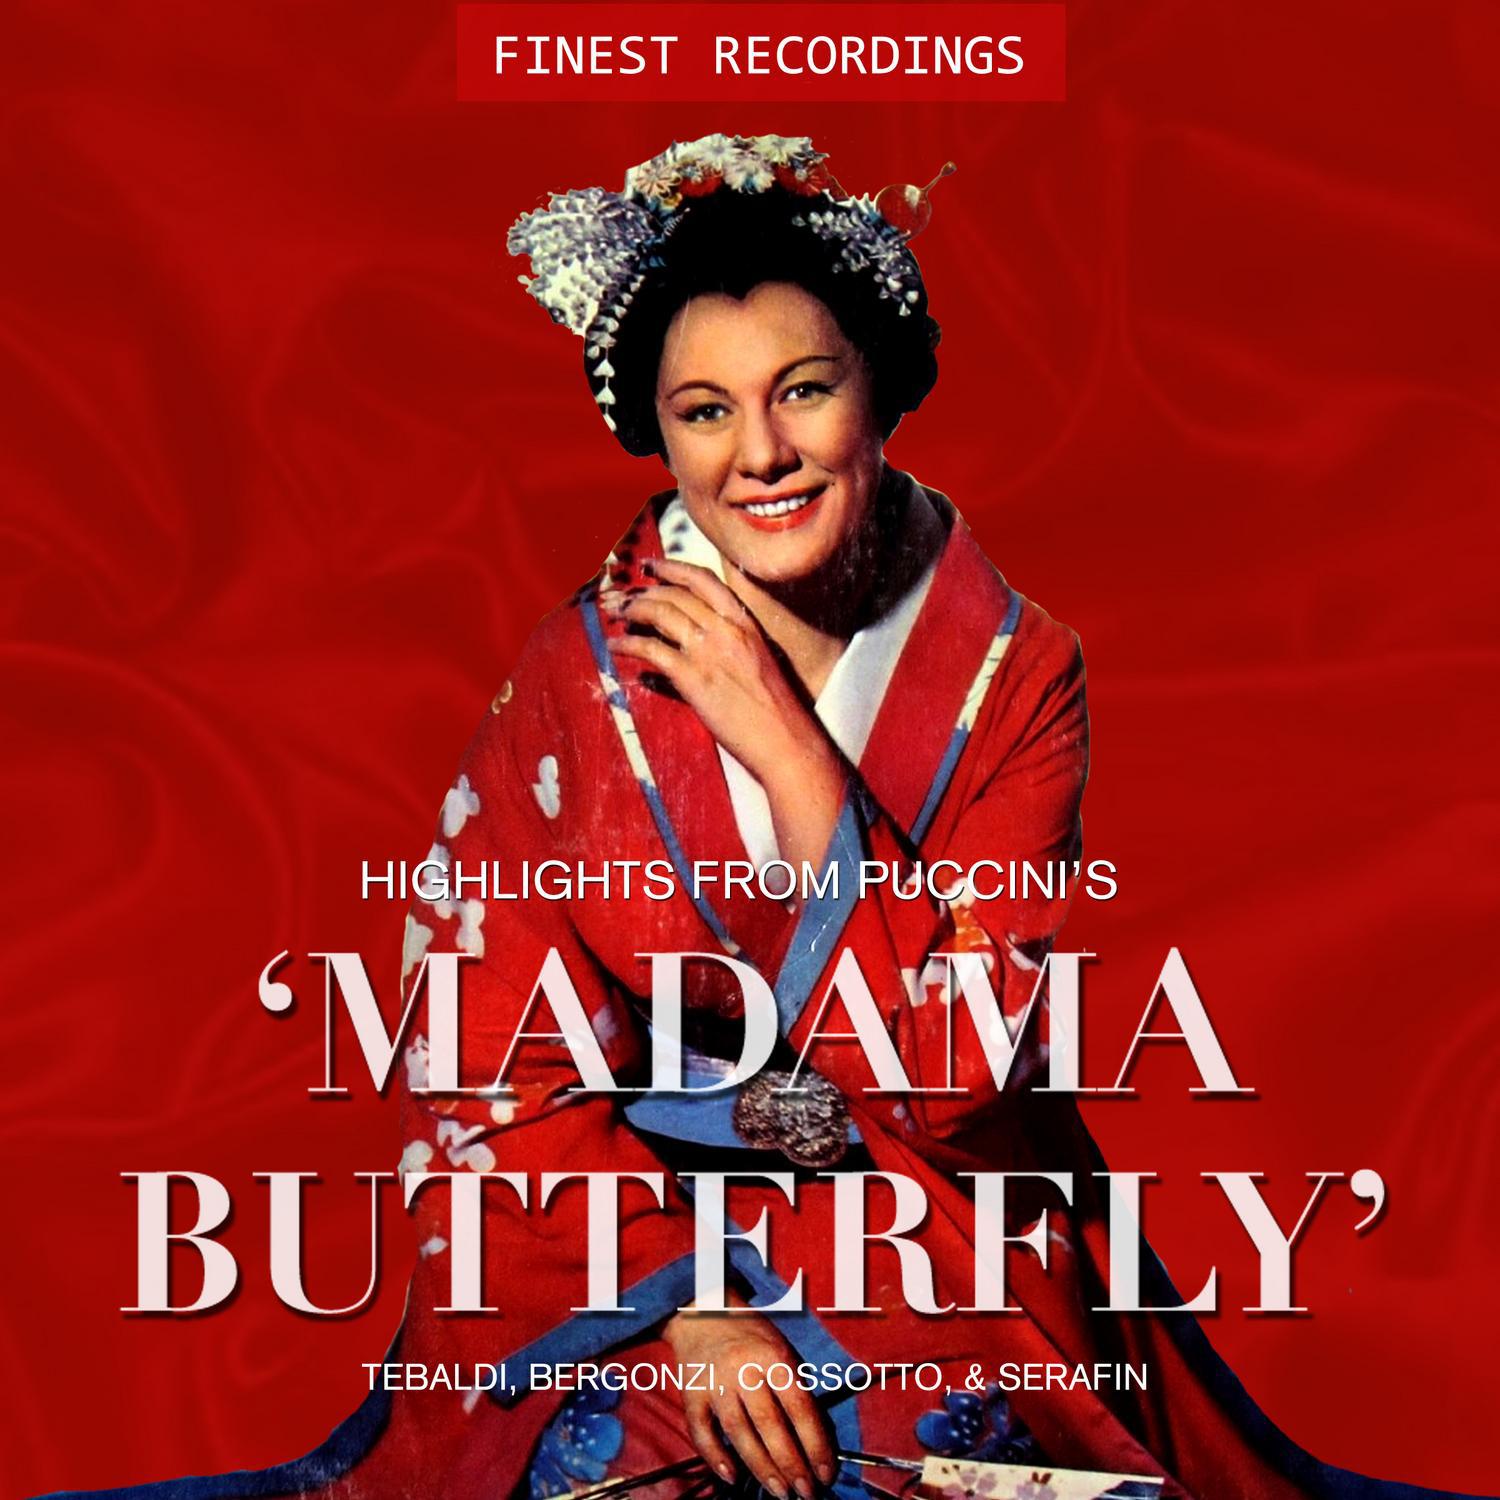 Finest Recordings - Highlights from Puccini's 'Madama Butterfly' - Tebaldi, Bergonzi, Cossotto, & Serafin